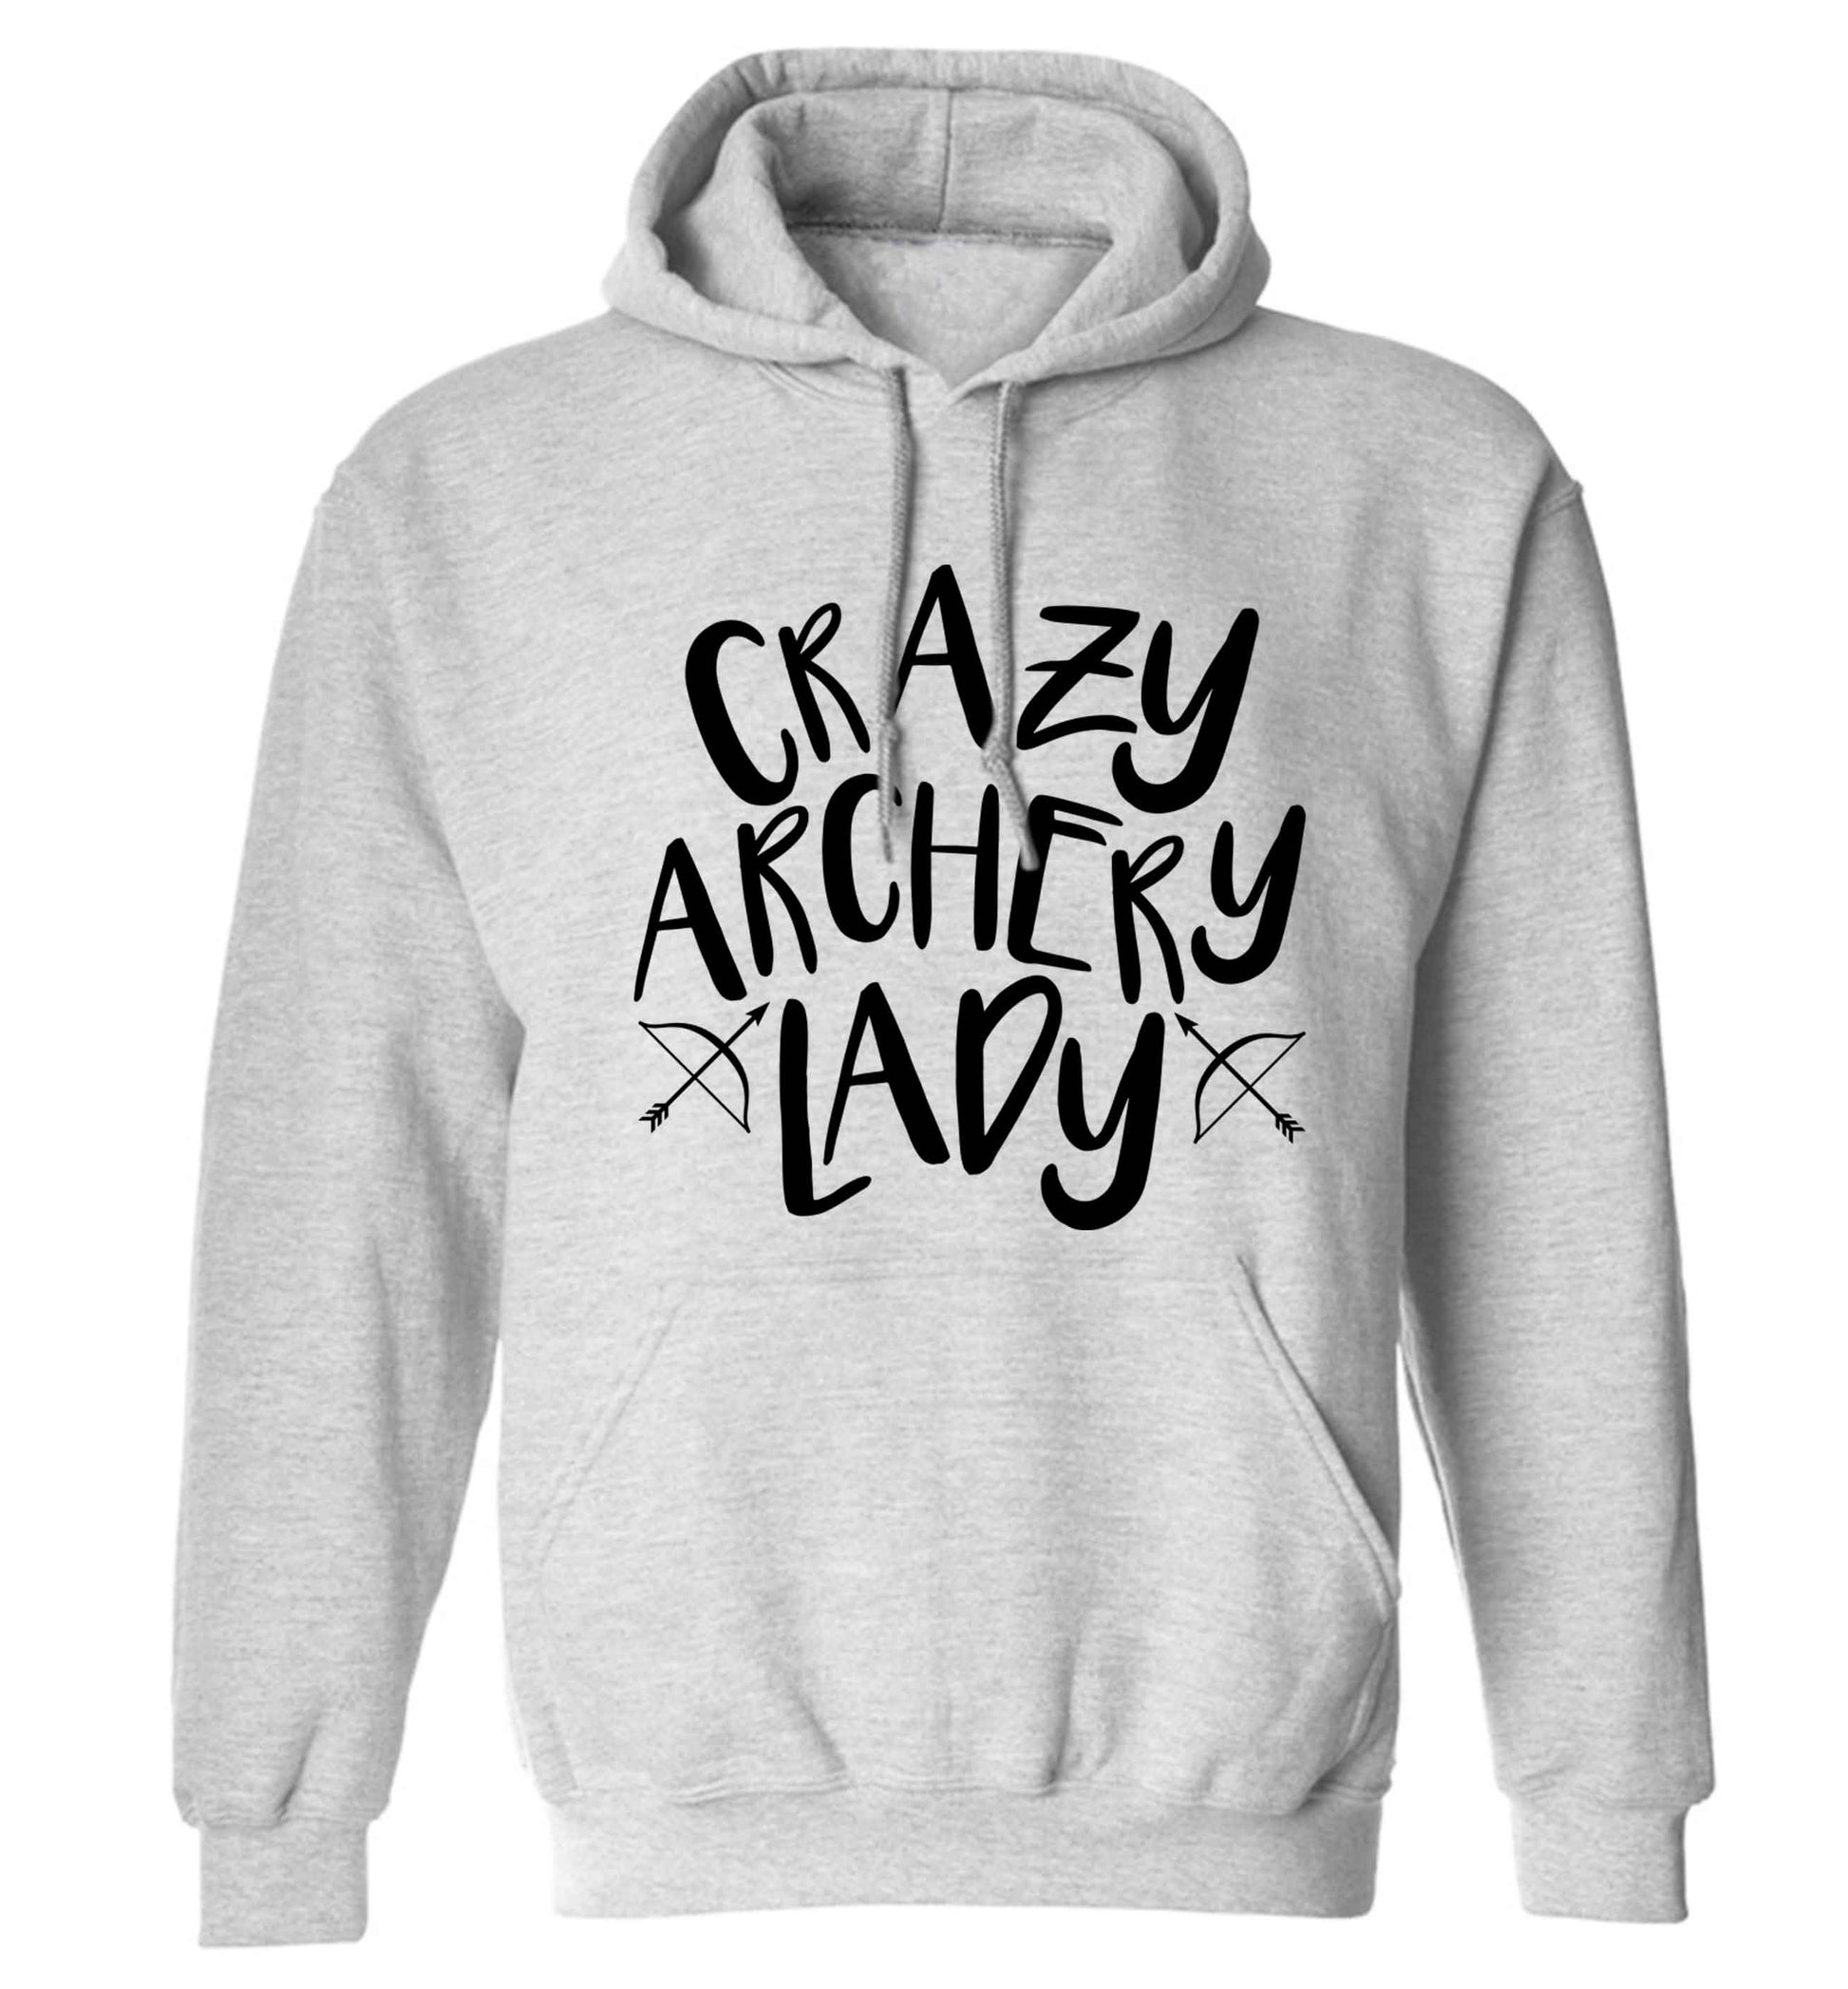 Crazy archery lady adults unisex grey hoodie 2XL